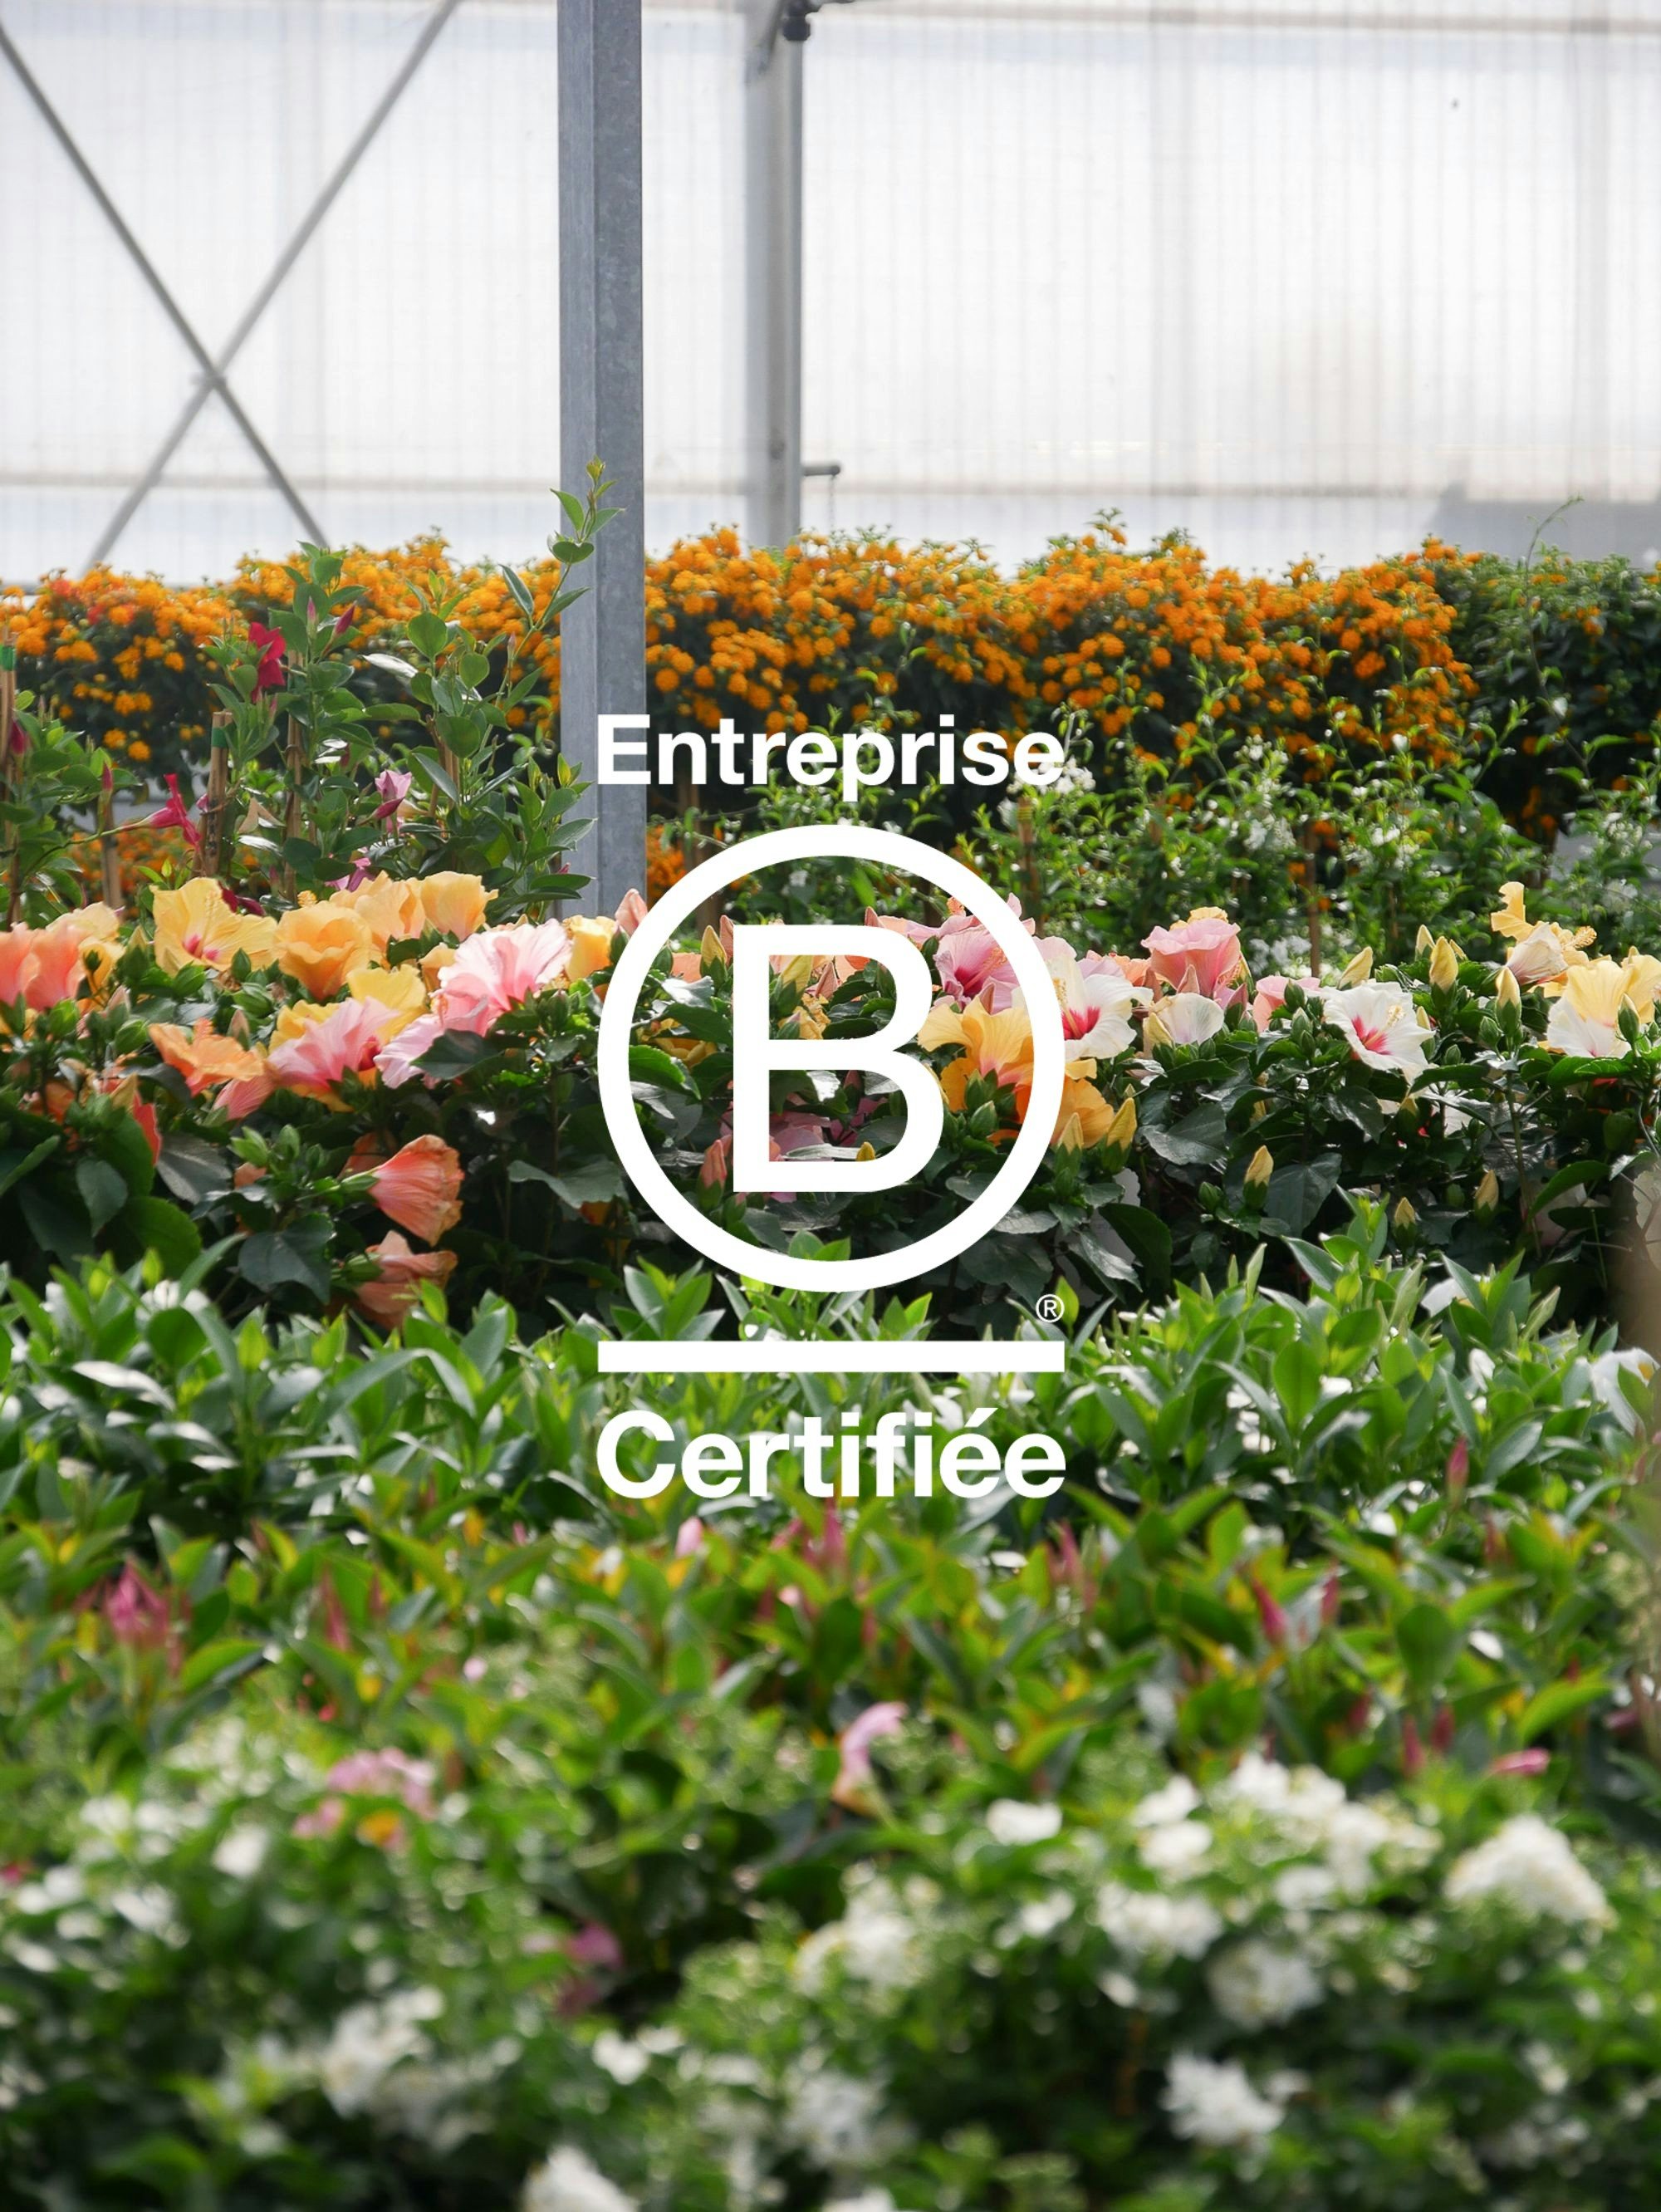 Certified B Corp